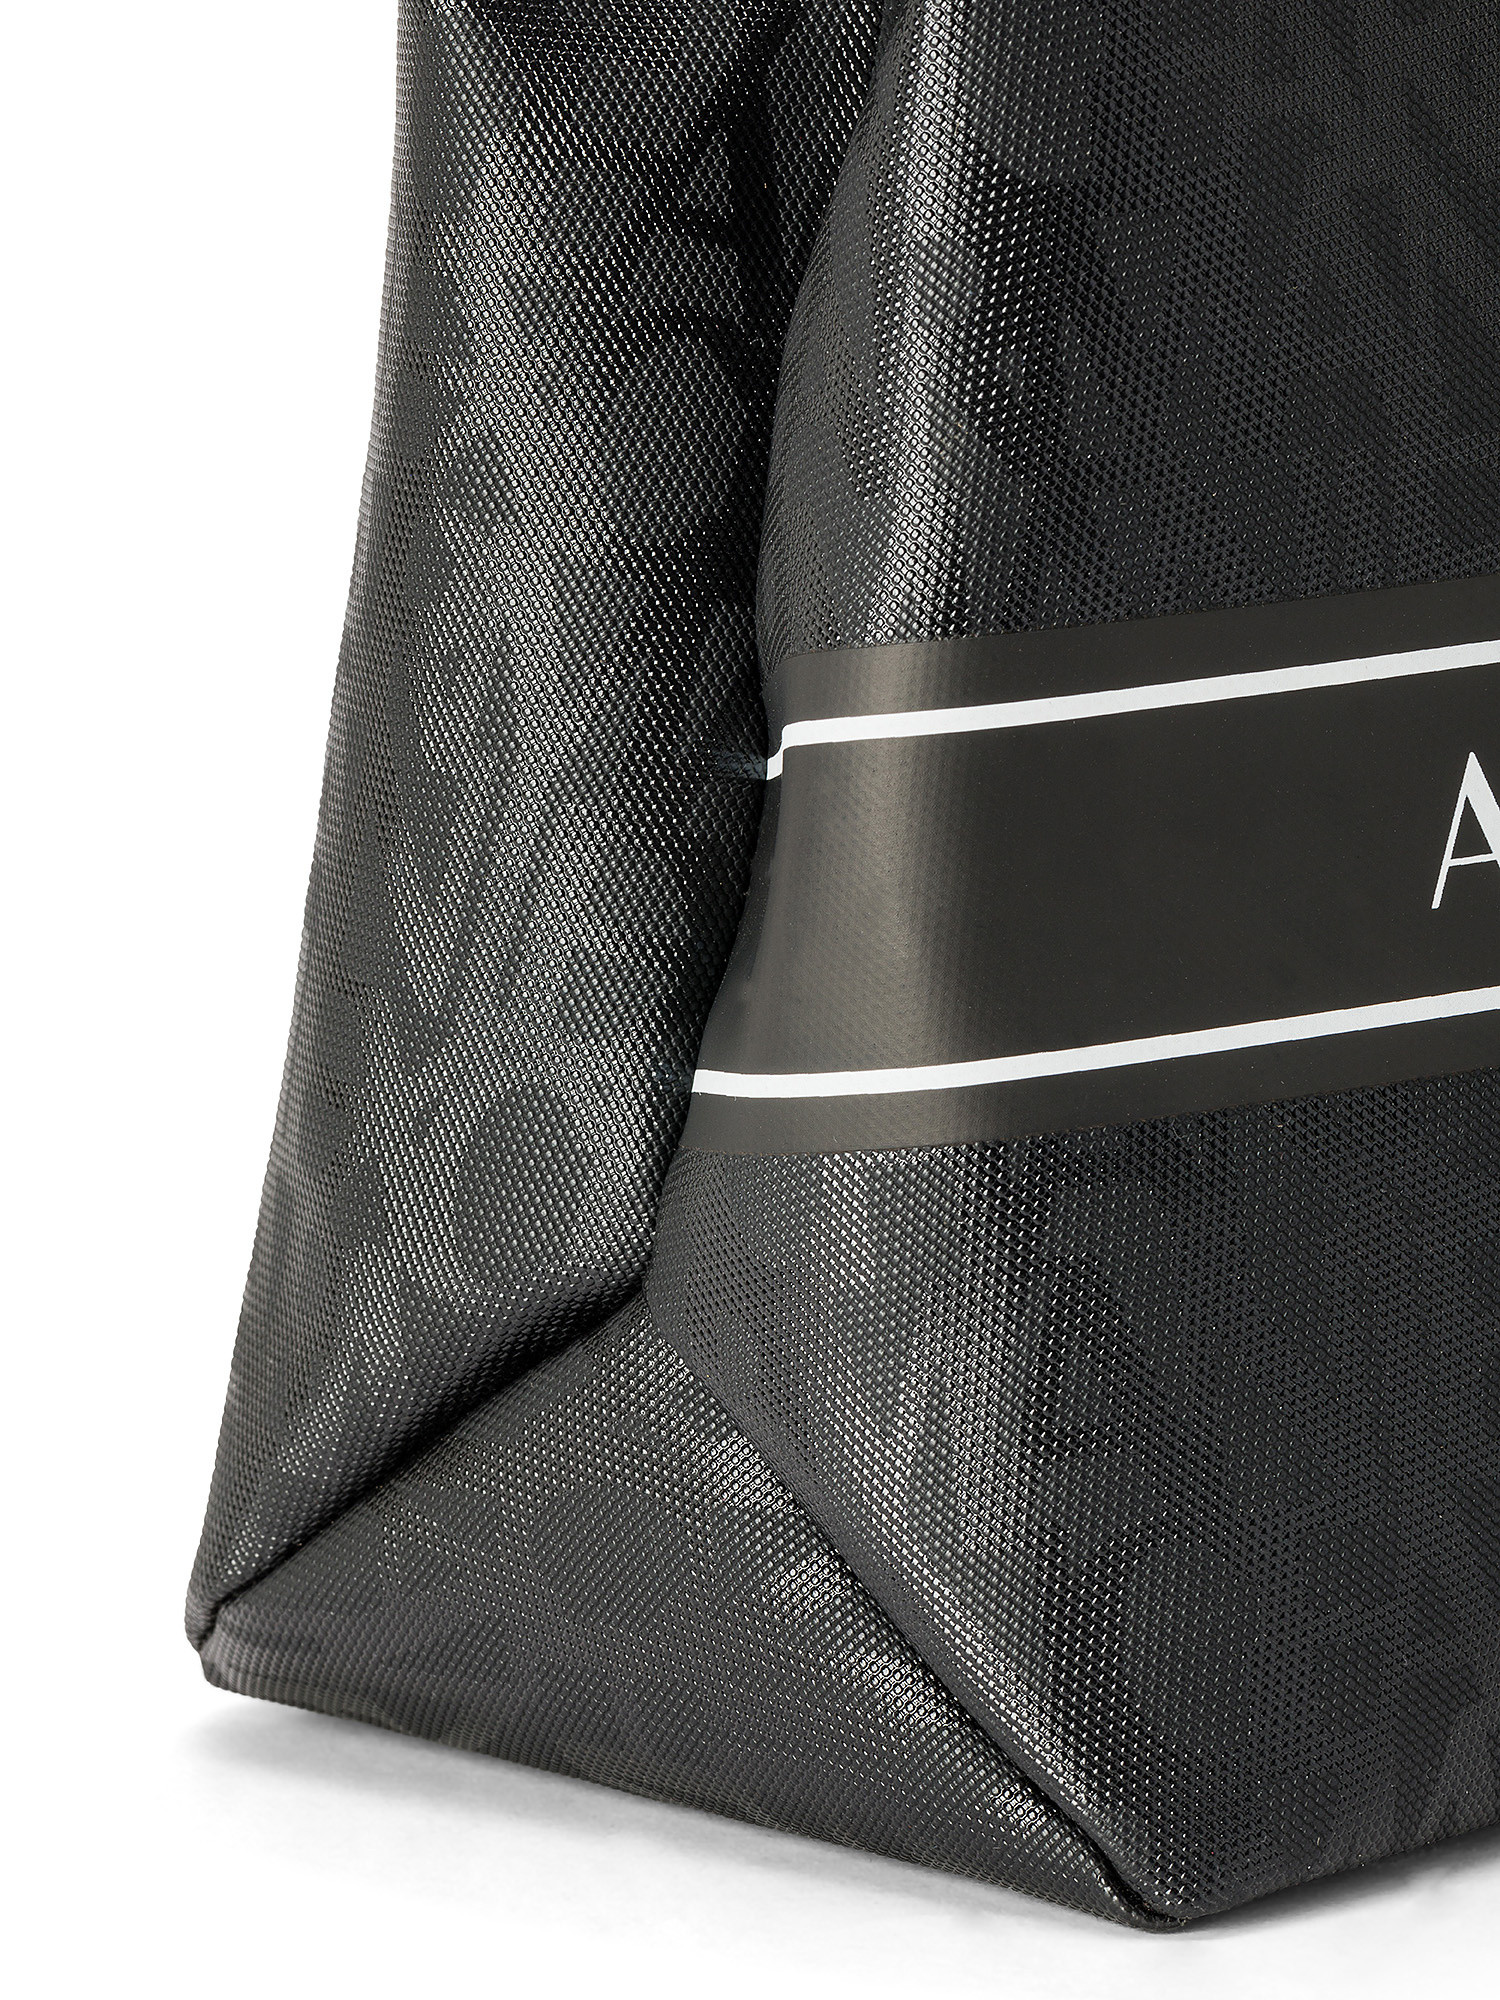 Armani Exchange - Shopper bag con logo all over, Nero, large image number 2